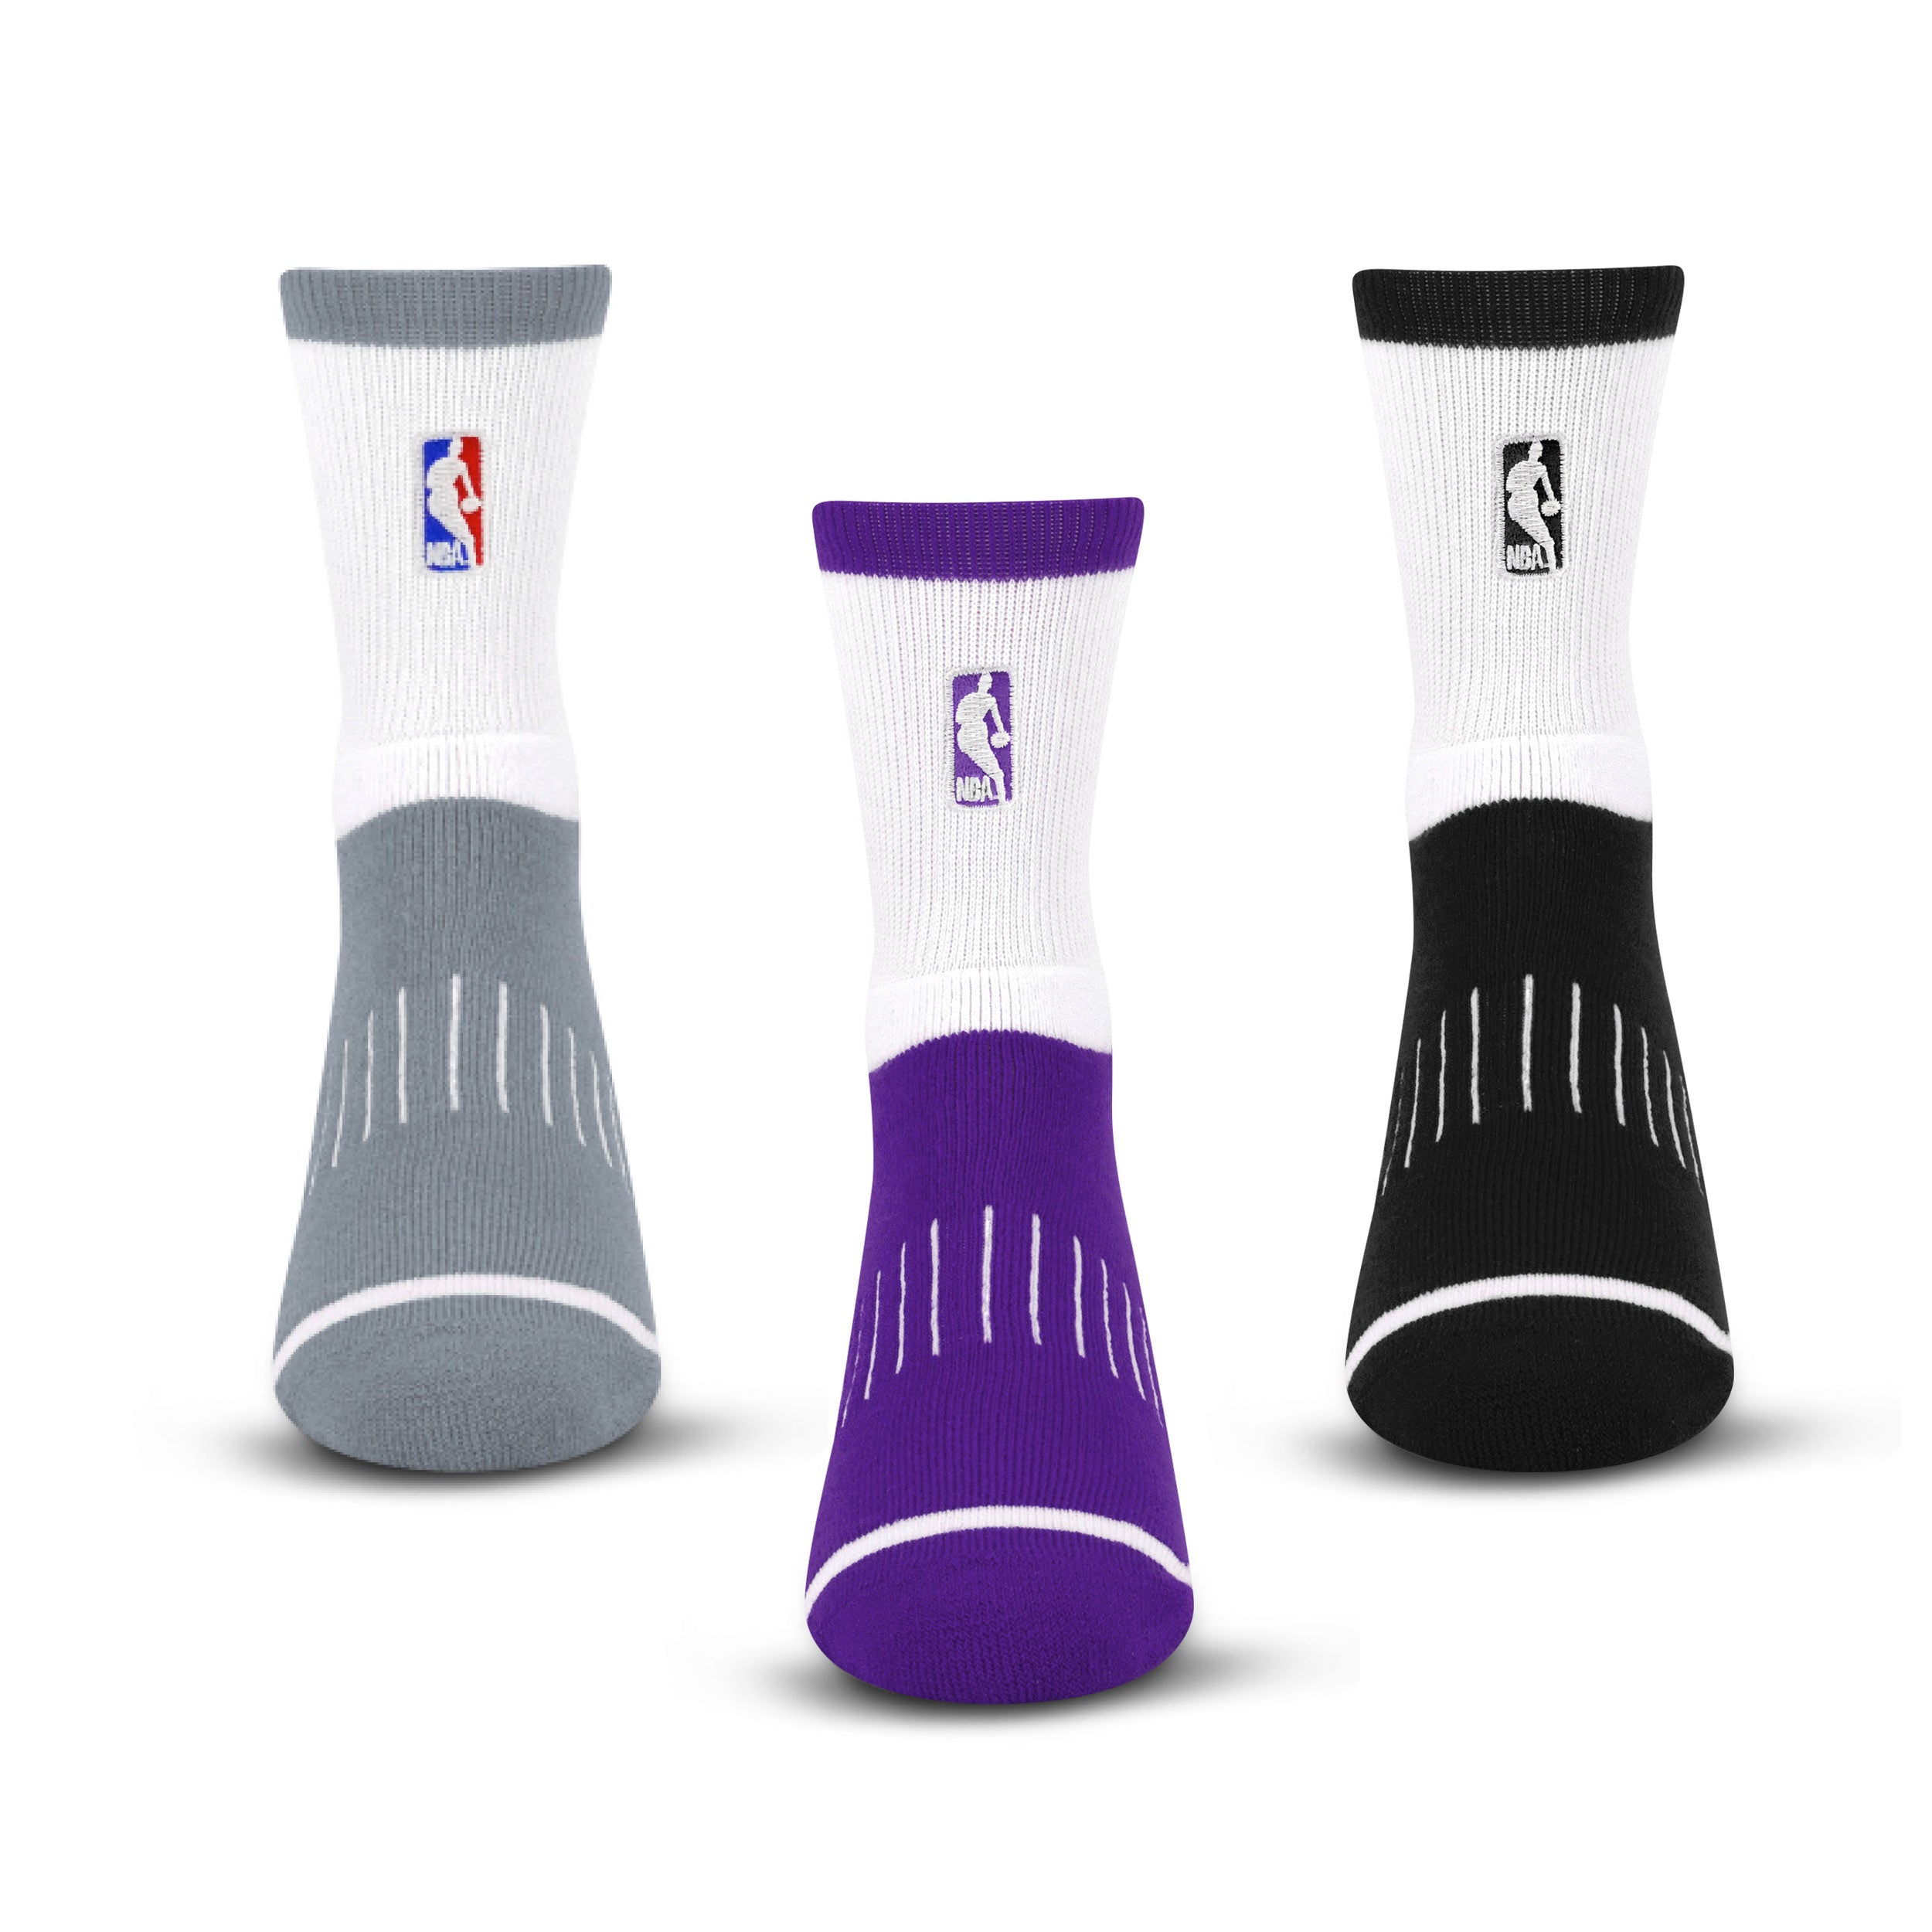 NBA Nike Elite Quick Crew Socks - Purple